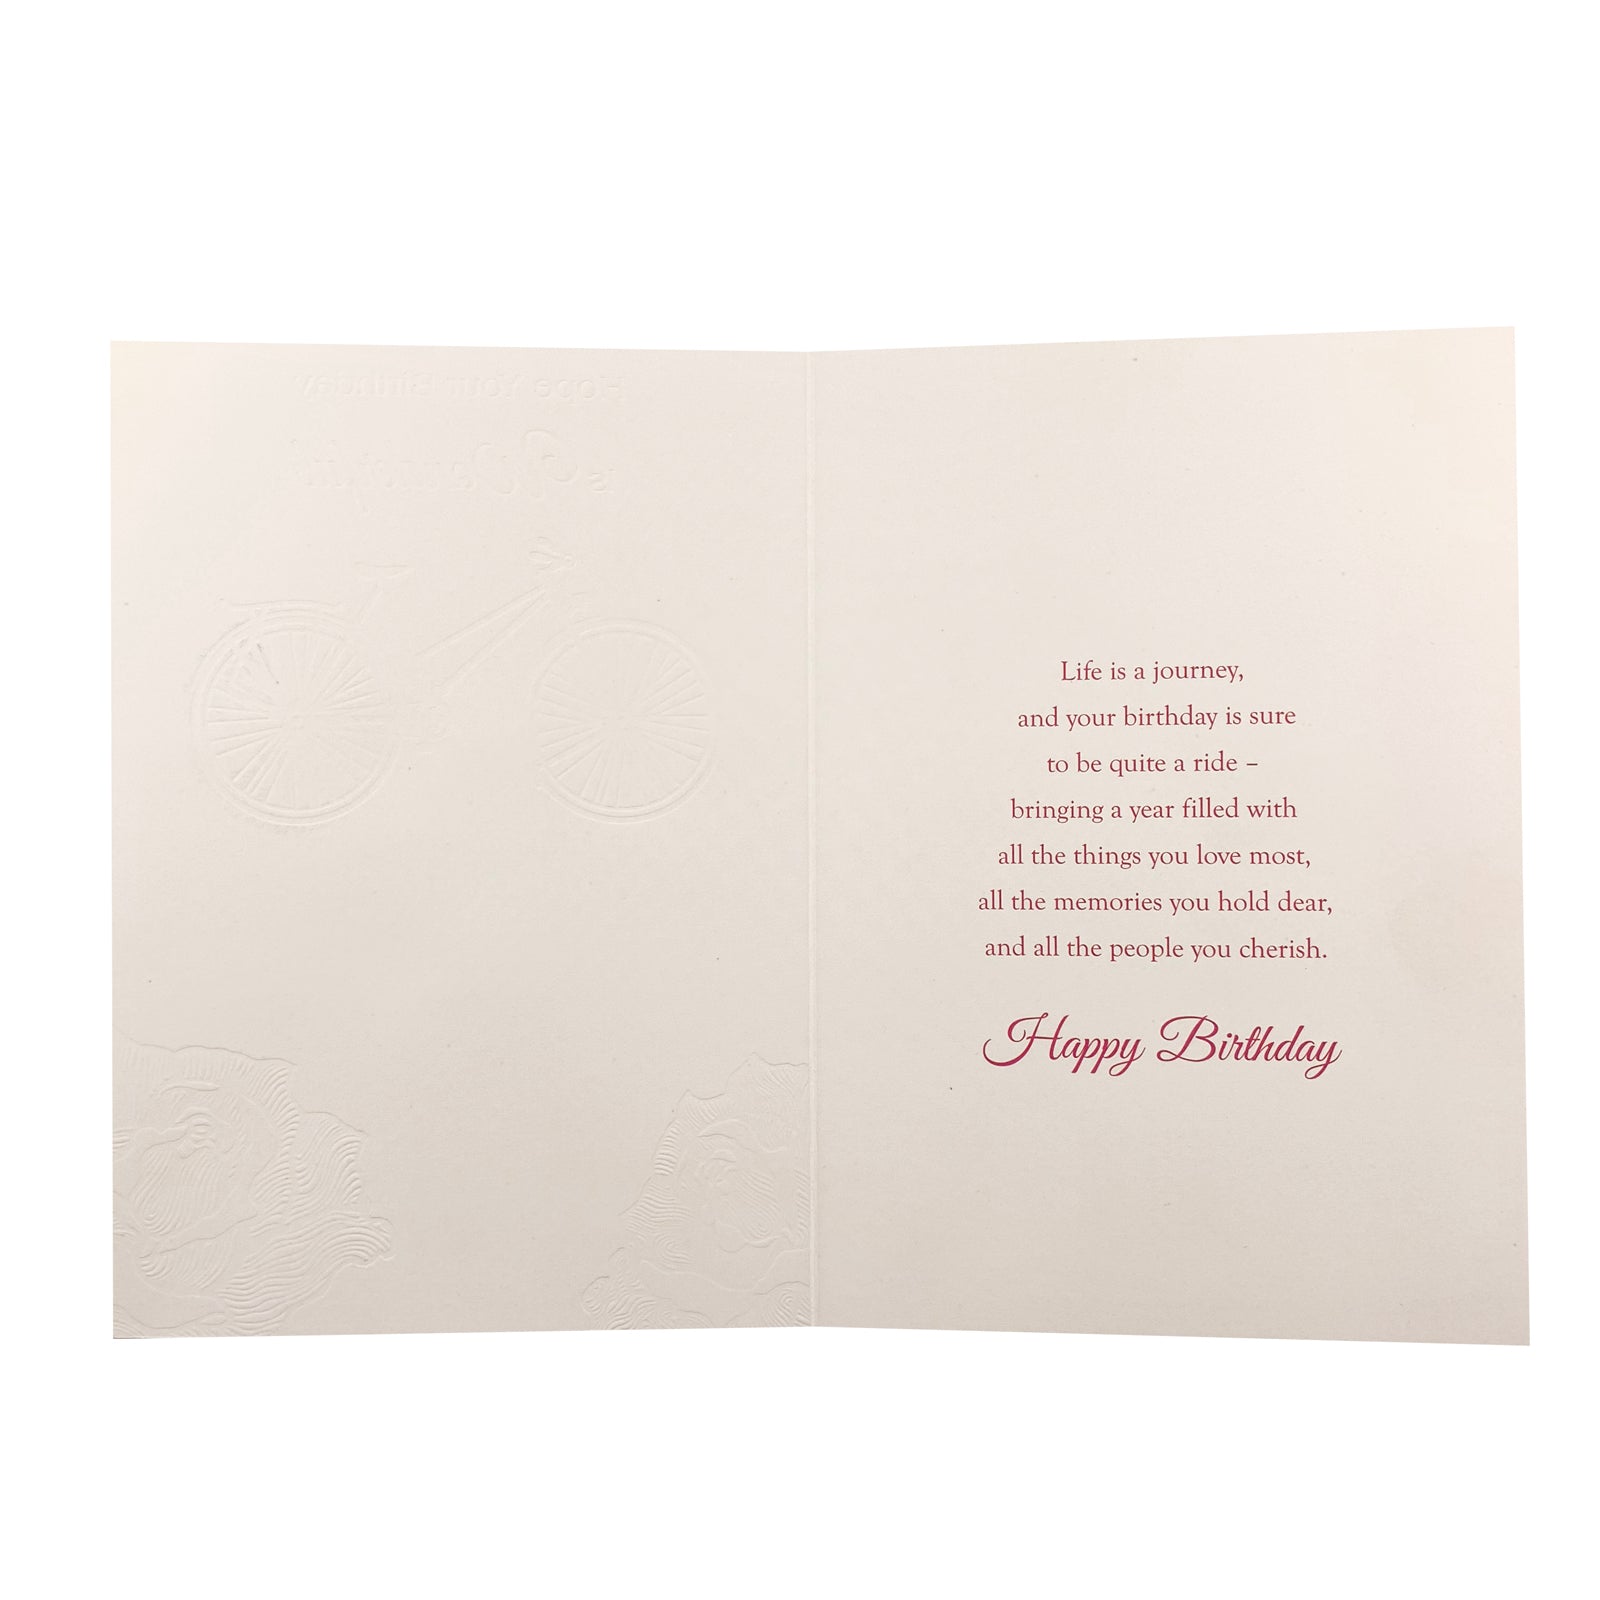 Designer Greetings Birthday Card - Hope Your Birthday Is Wonderful Bicycle